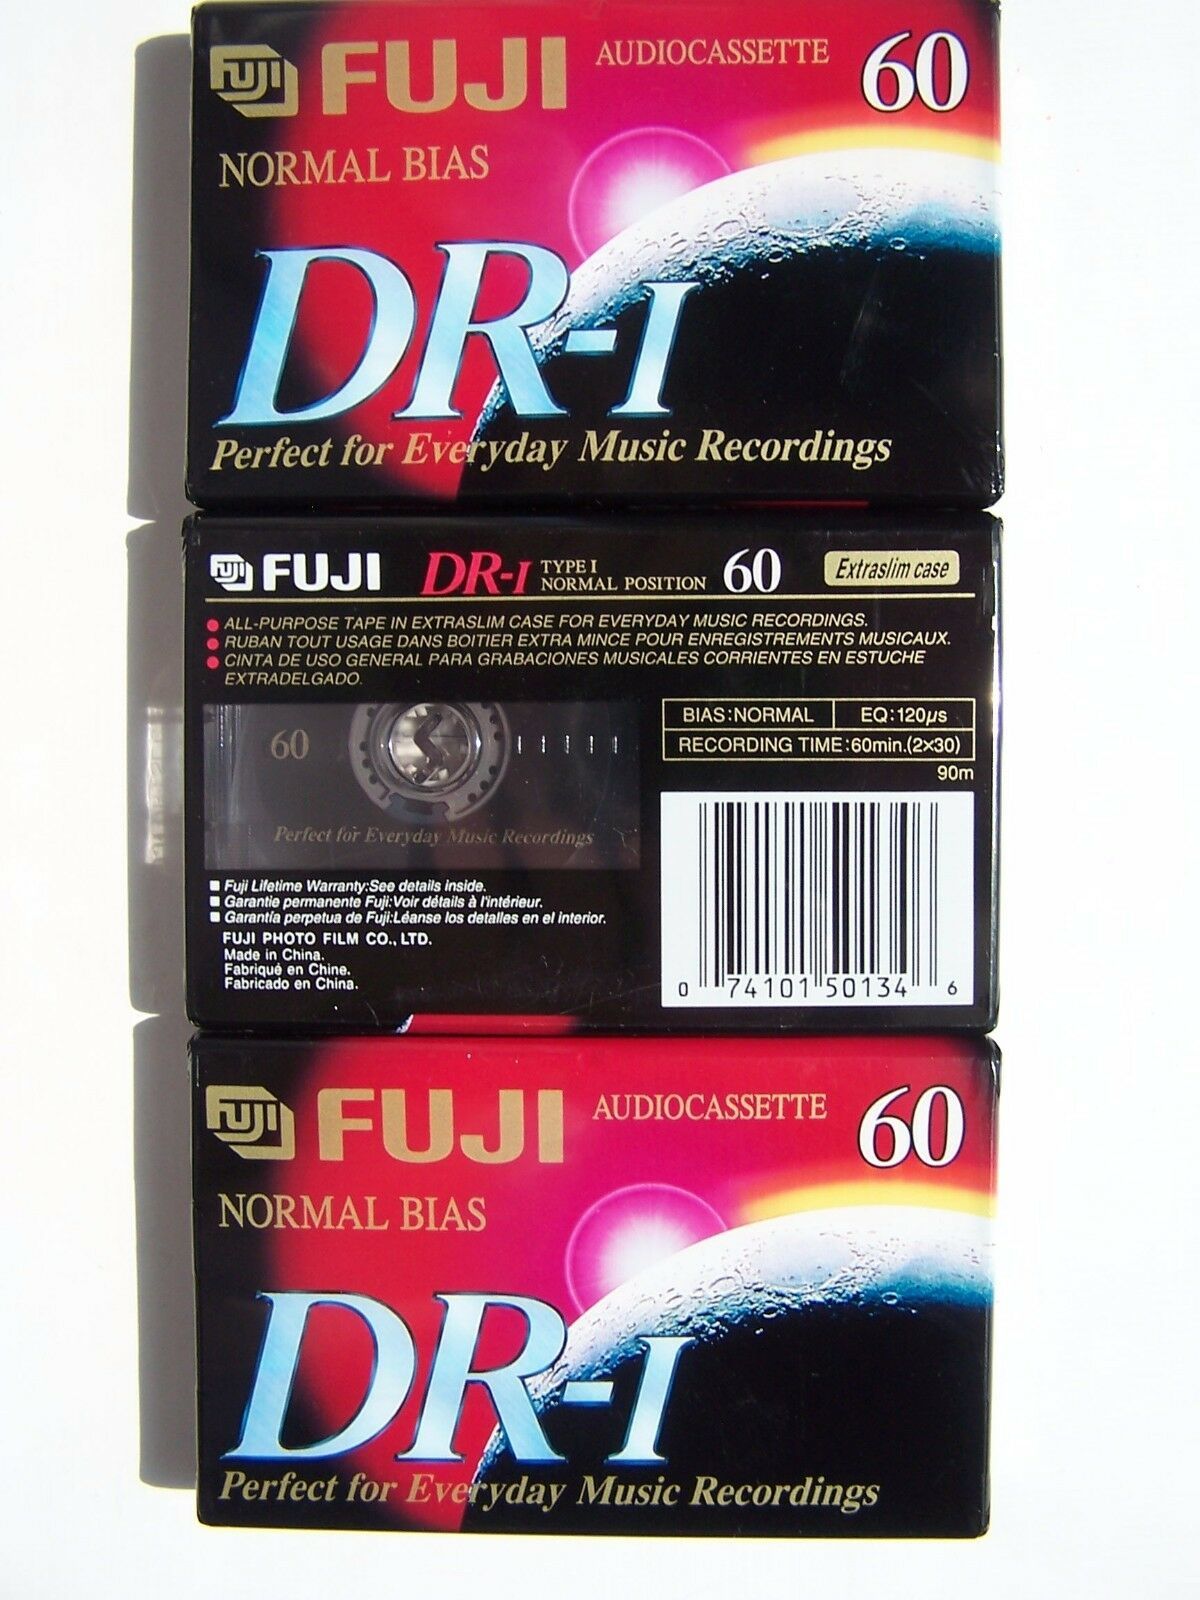 Fuji Dr-i 60 Normal Bias Audio Cassette 3 Pack Tapes Factory Sealed 60 Mins Each - $6.58